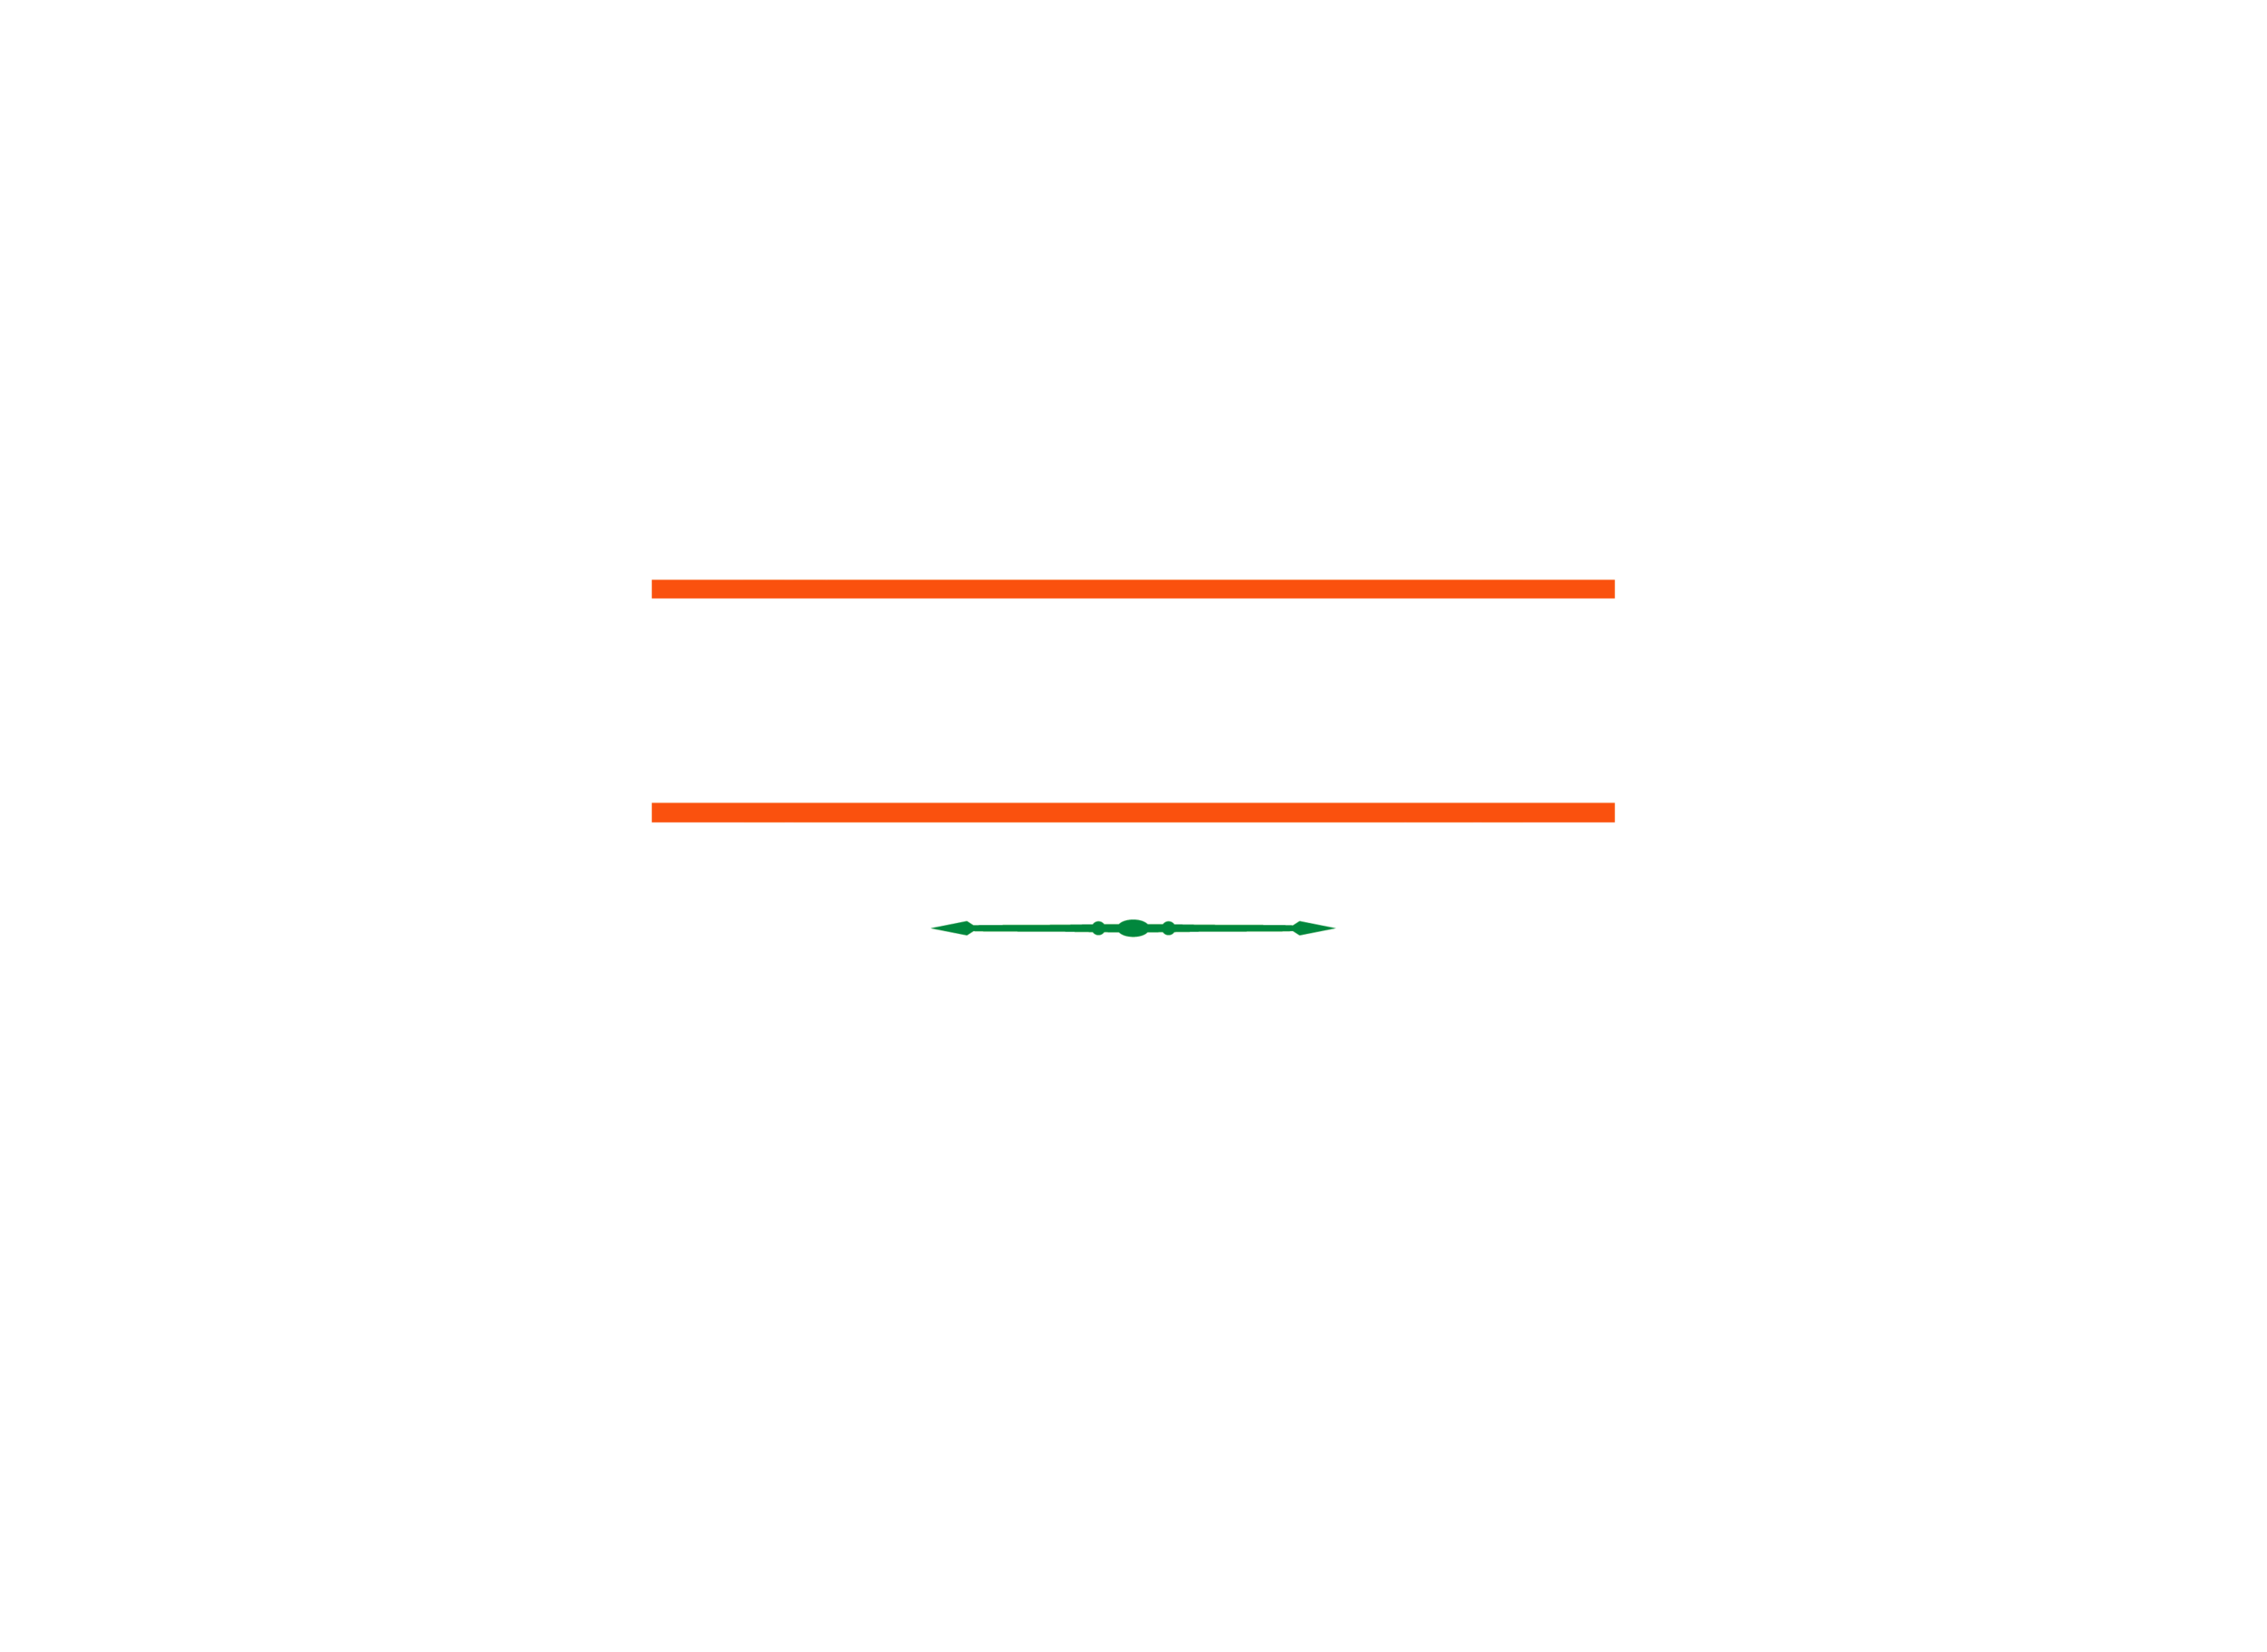 Ascarate Golf Course Menu — Clasico Kitchen Bar